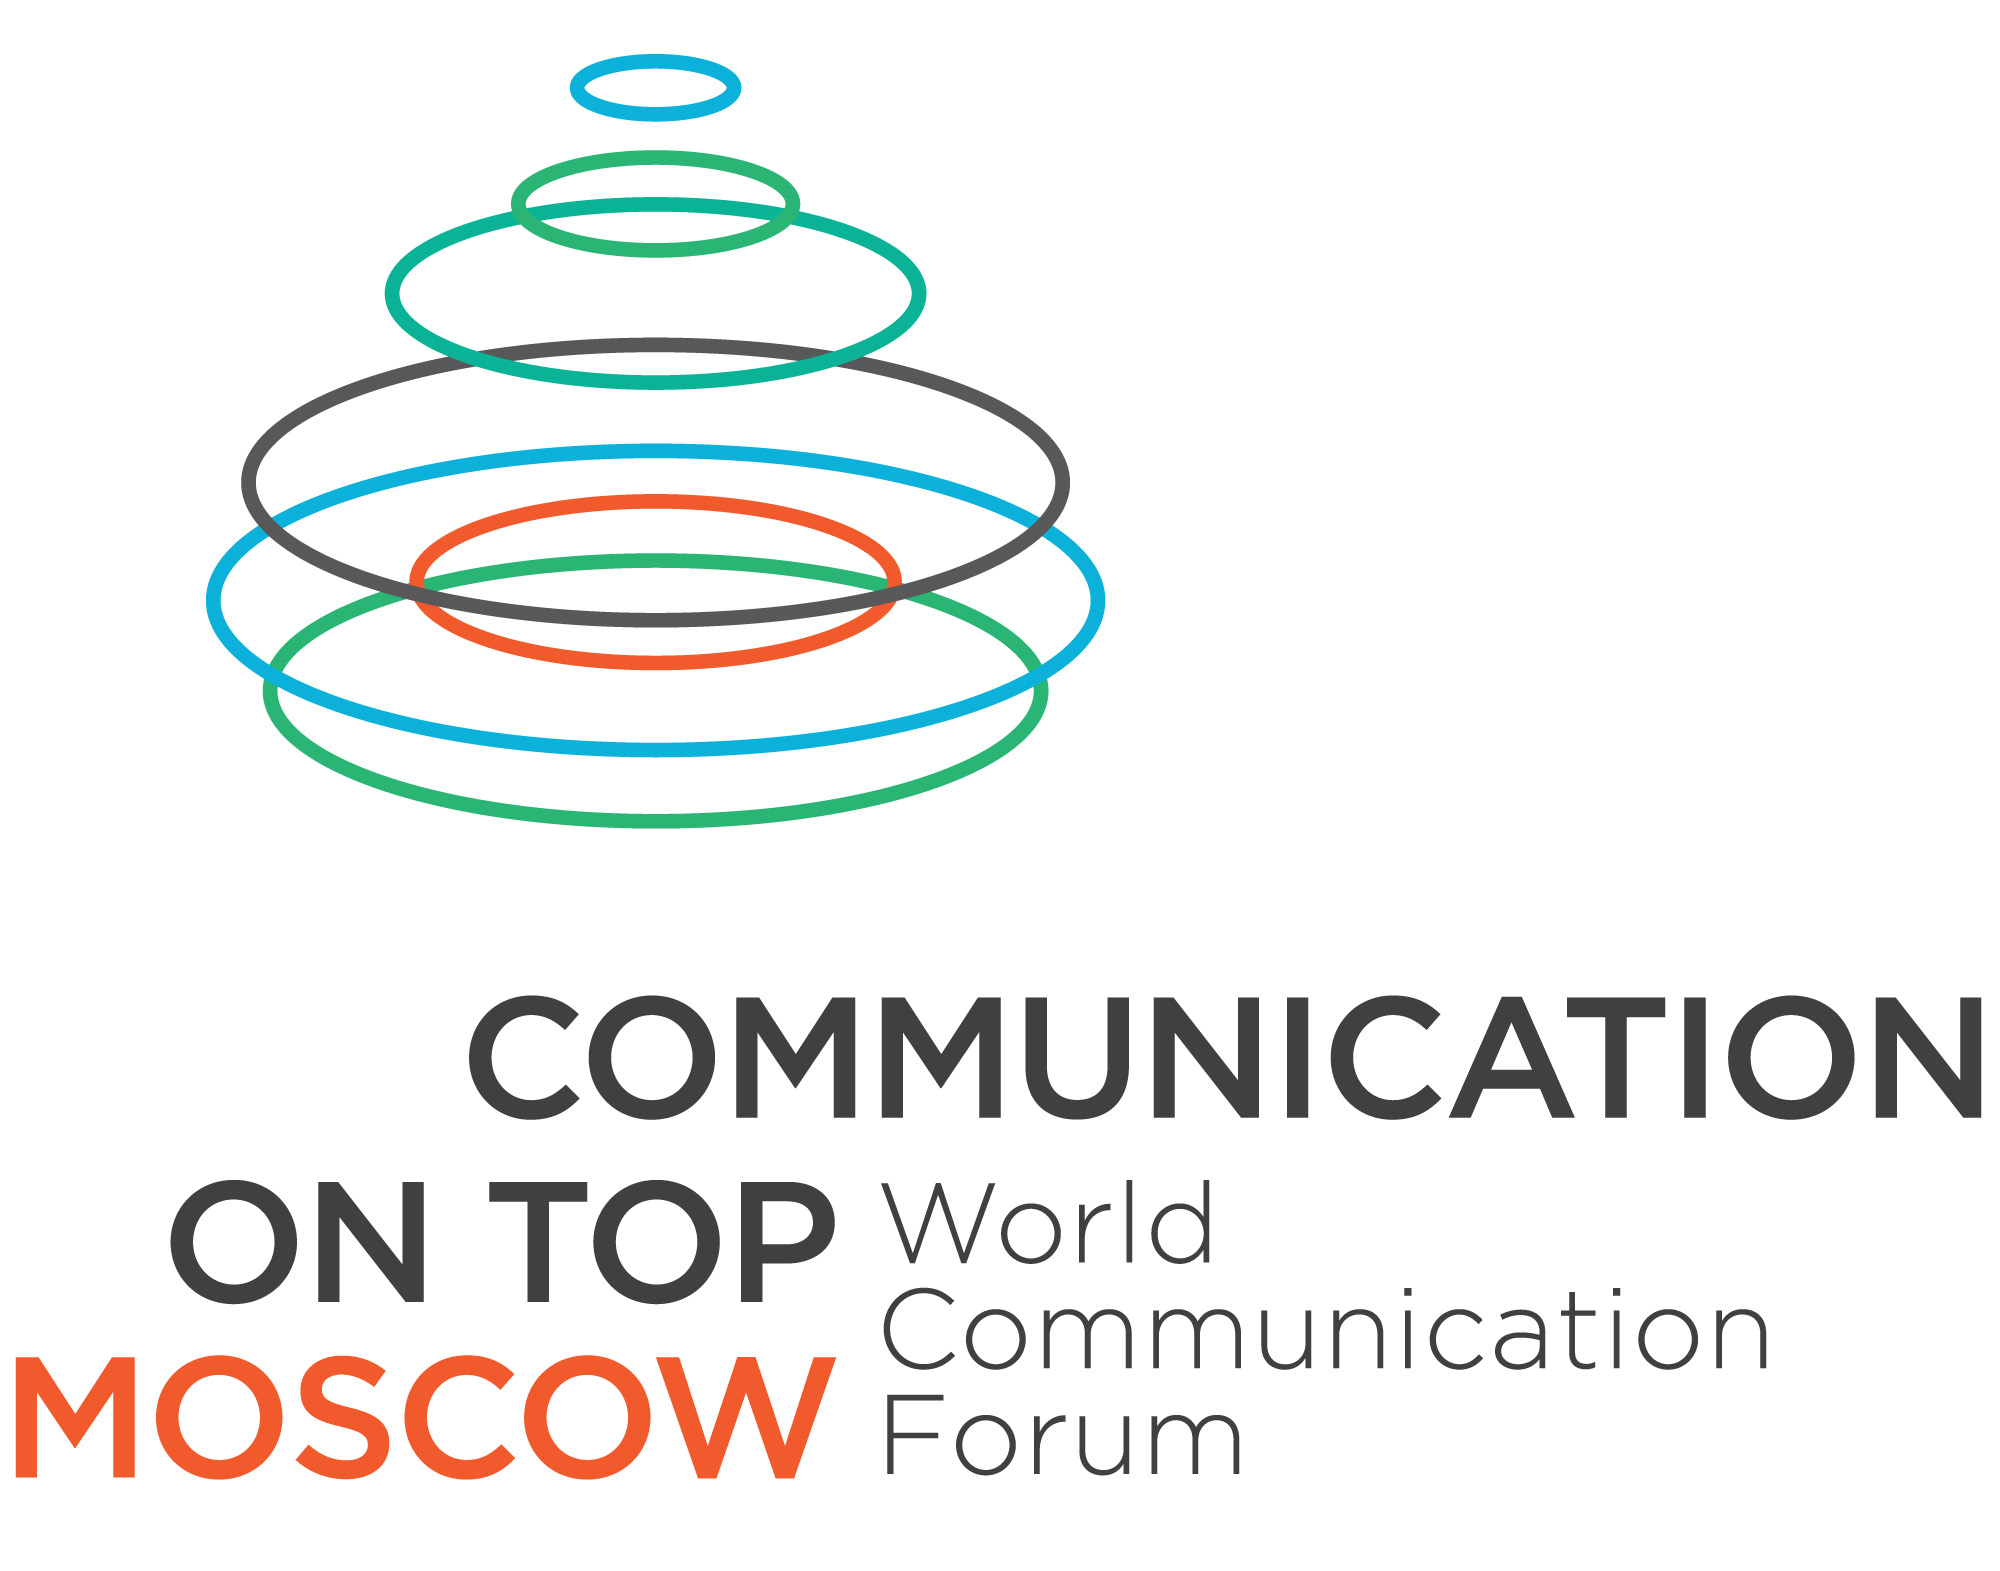 world communication forum, moscow regional session, depot wpf, visual storytelling, визуальный сторителлинг, креатив, брендинг